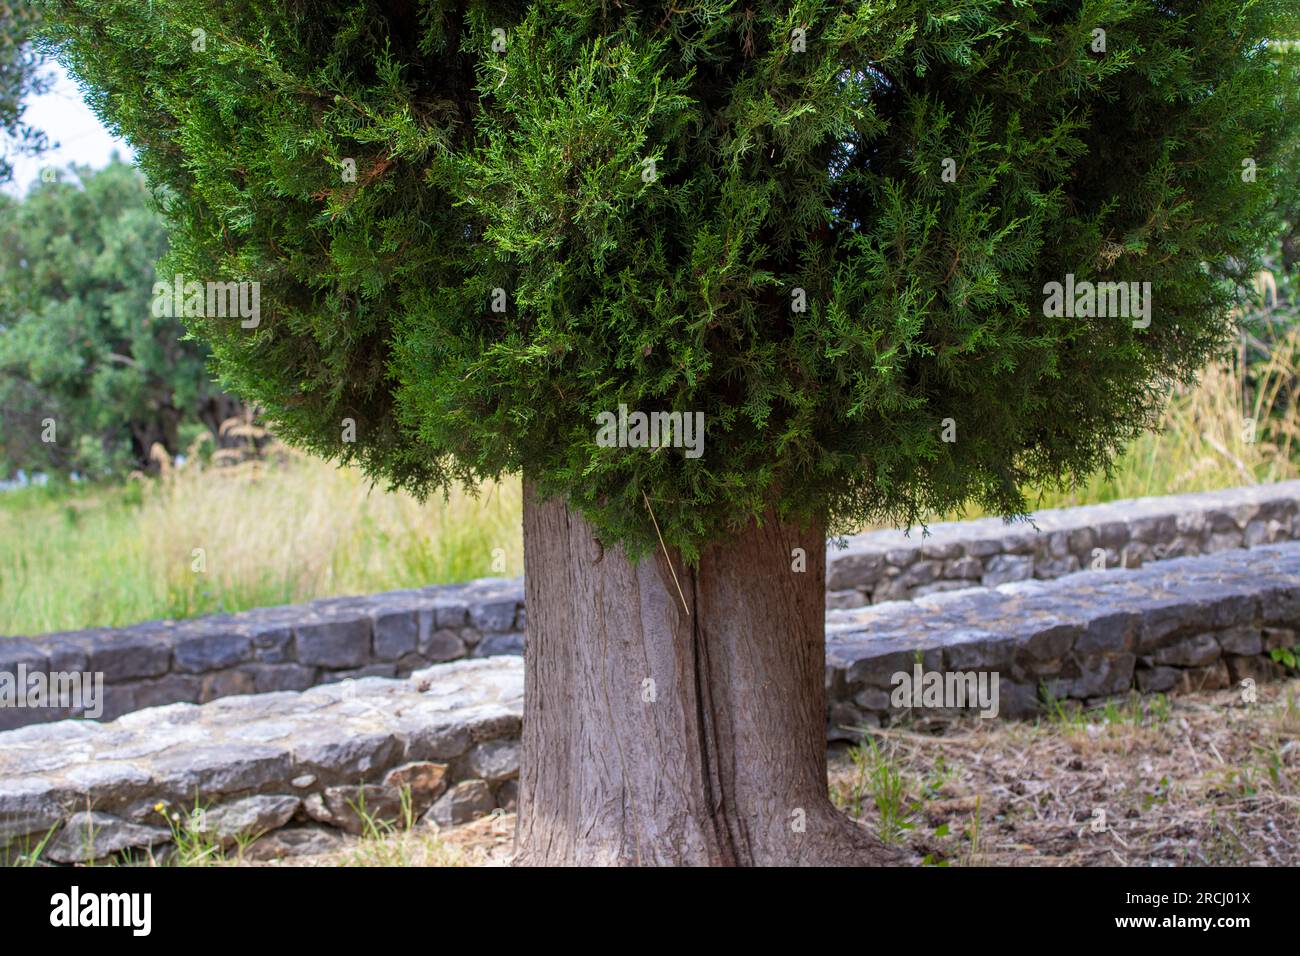 Large Thuja Tree. Close-up of a Green Arborvitae Bush. Stock Photo